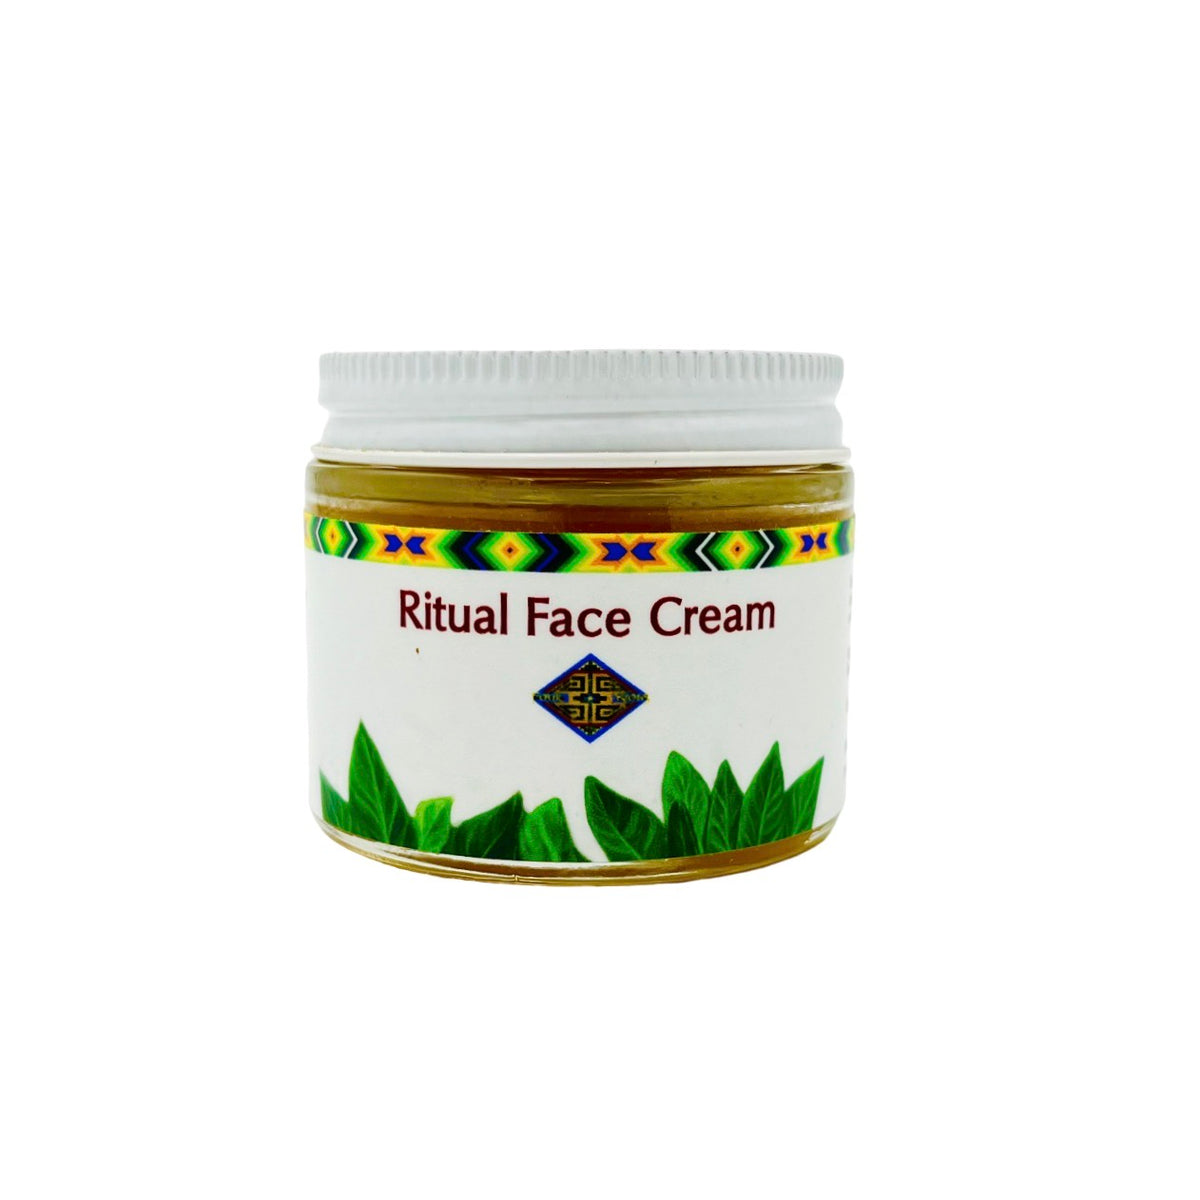 Ritual Face Cream